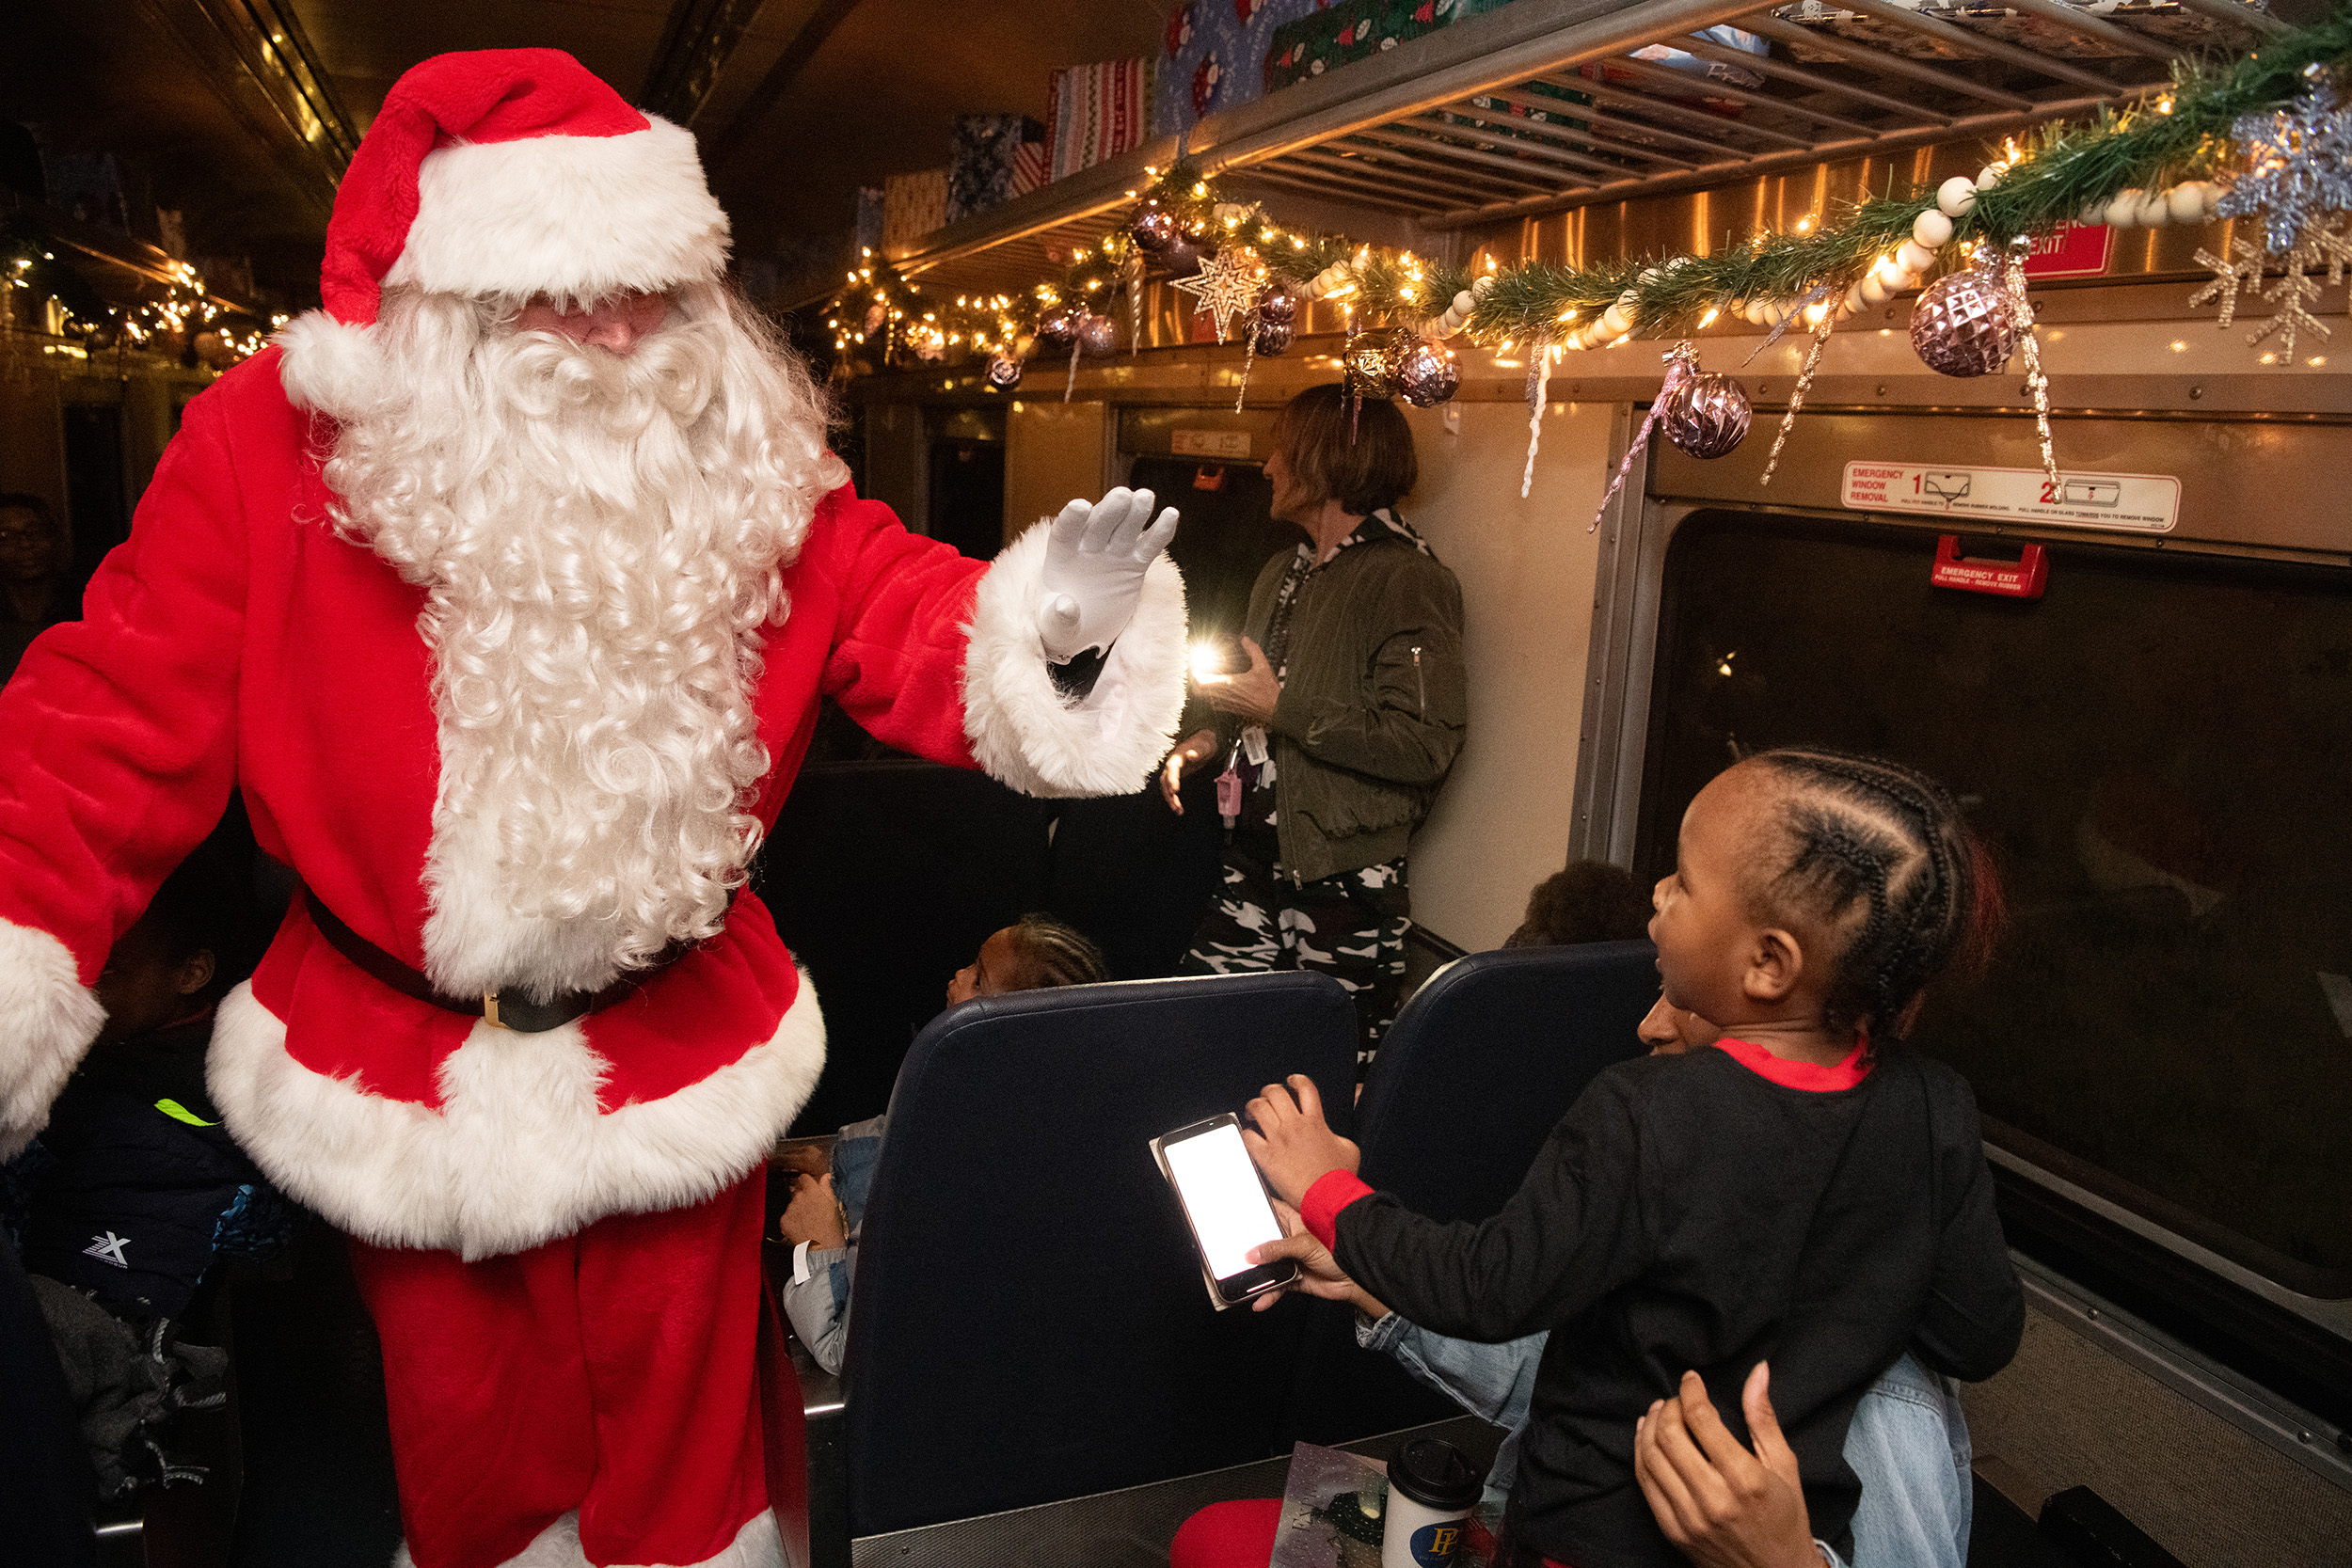 Santa Claus greets children on the Polar Express train ride at the B&O Railroad Museum